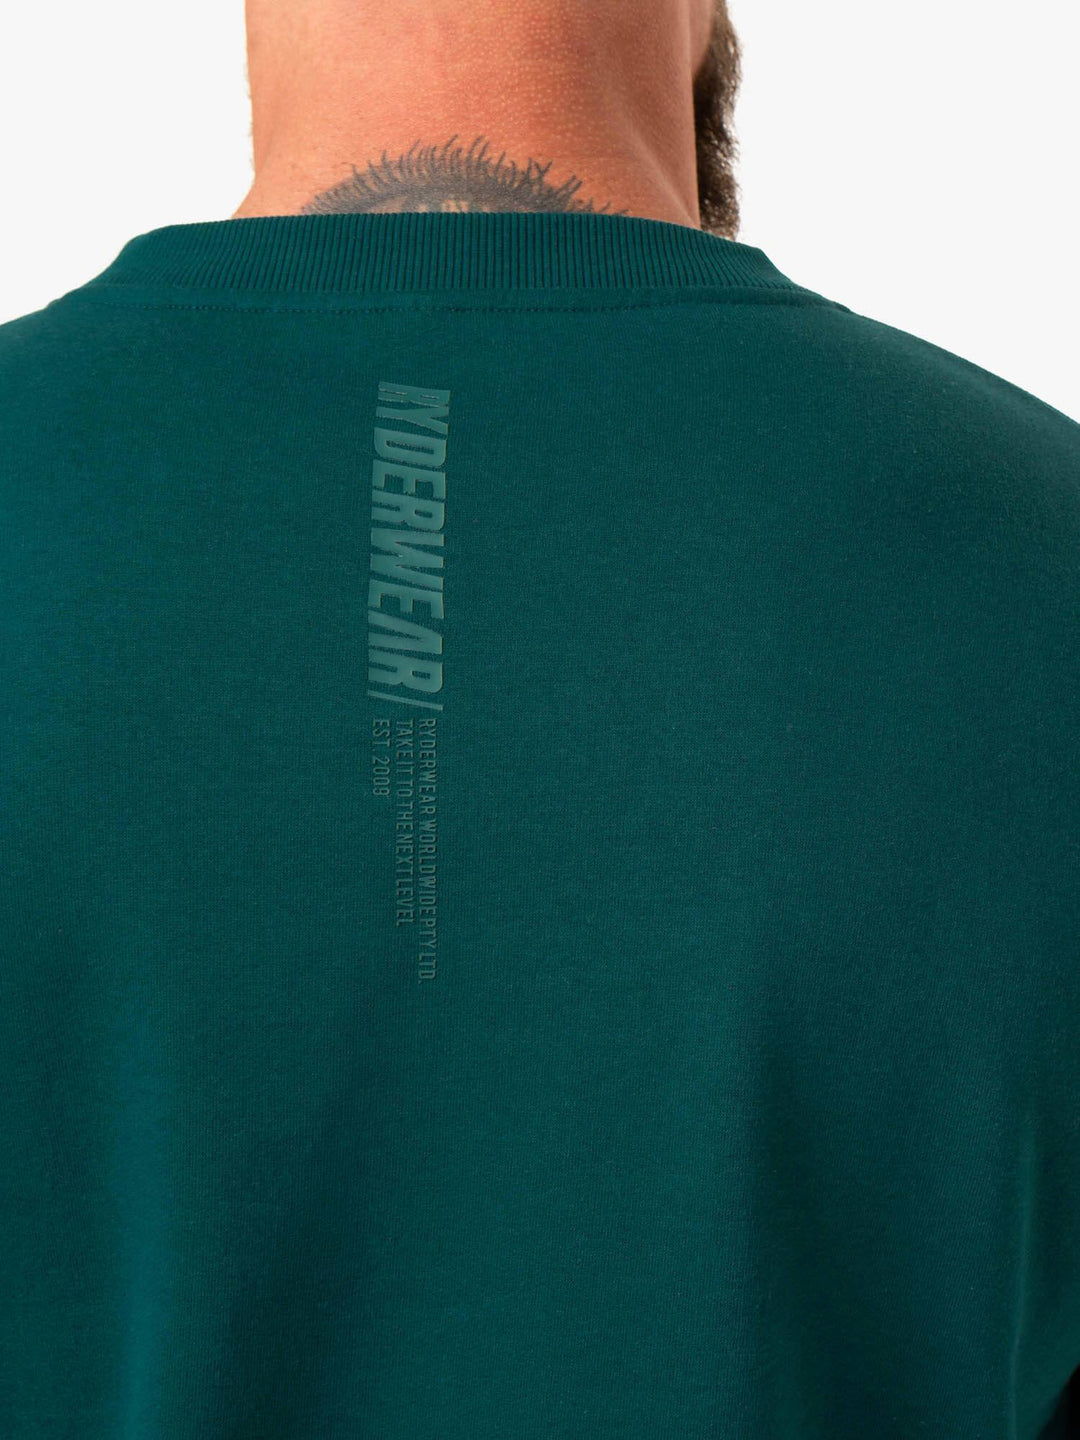 Reset Fleece Crew Neck - Emerald Clothing Ryderwear 